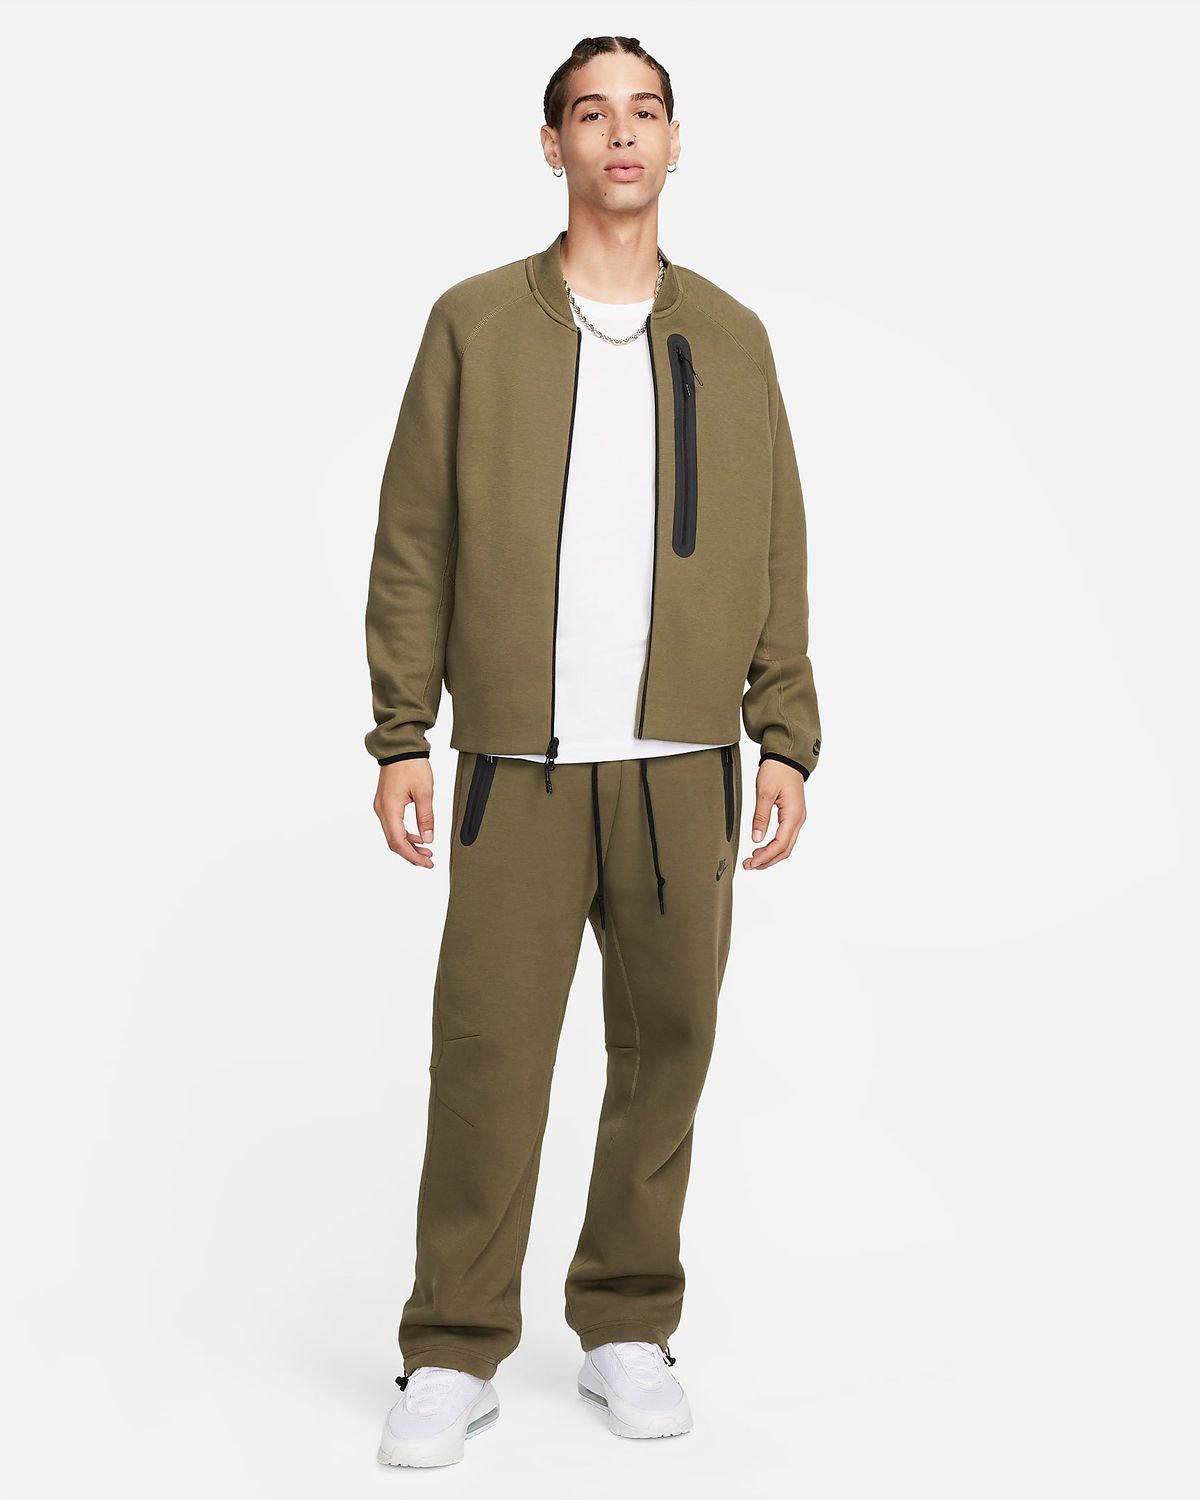 Nike-Tech-Fleece-Bomber-Jacket-Medium-Olive-Outfit